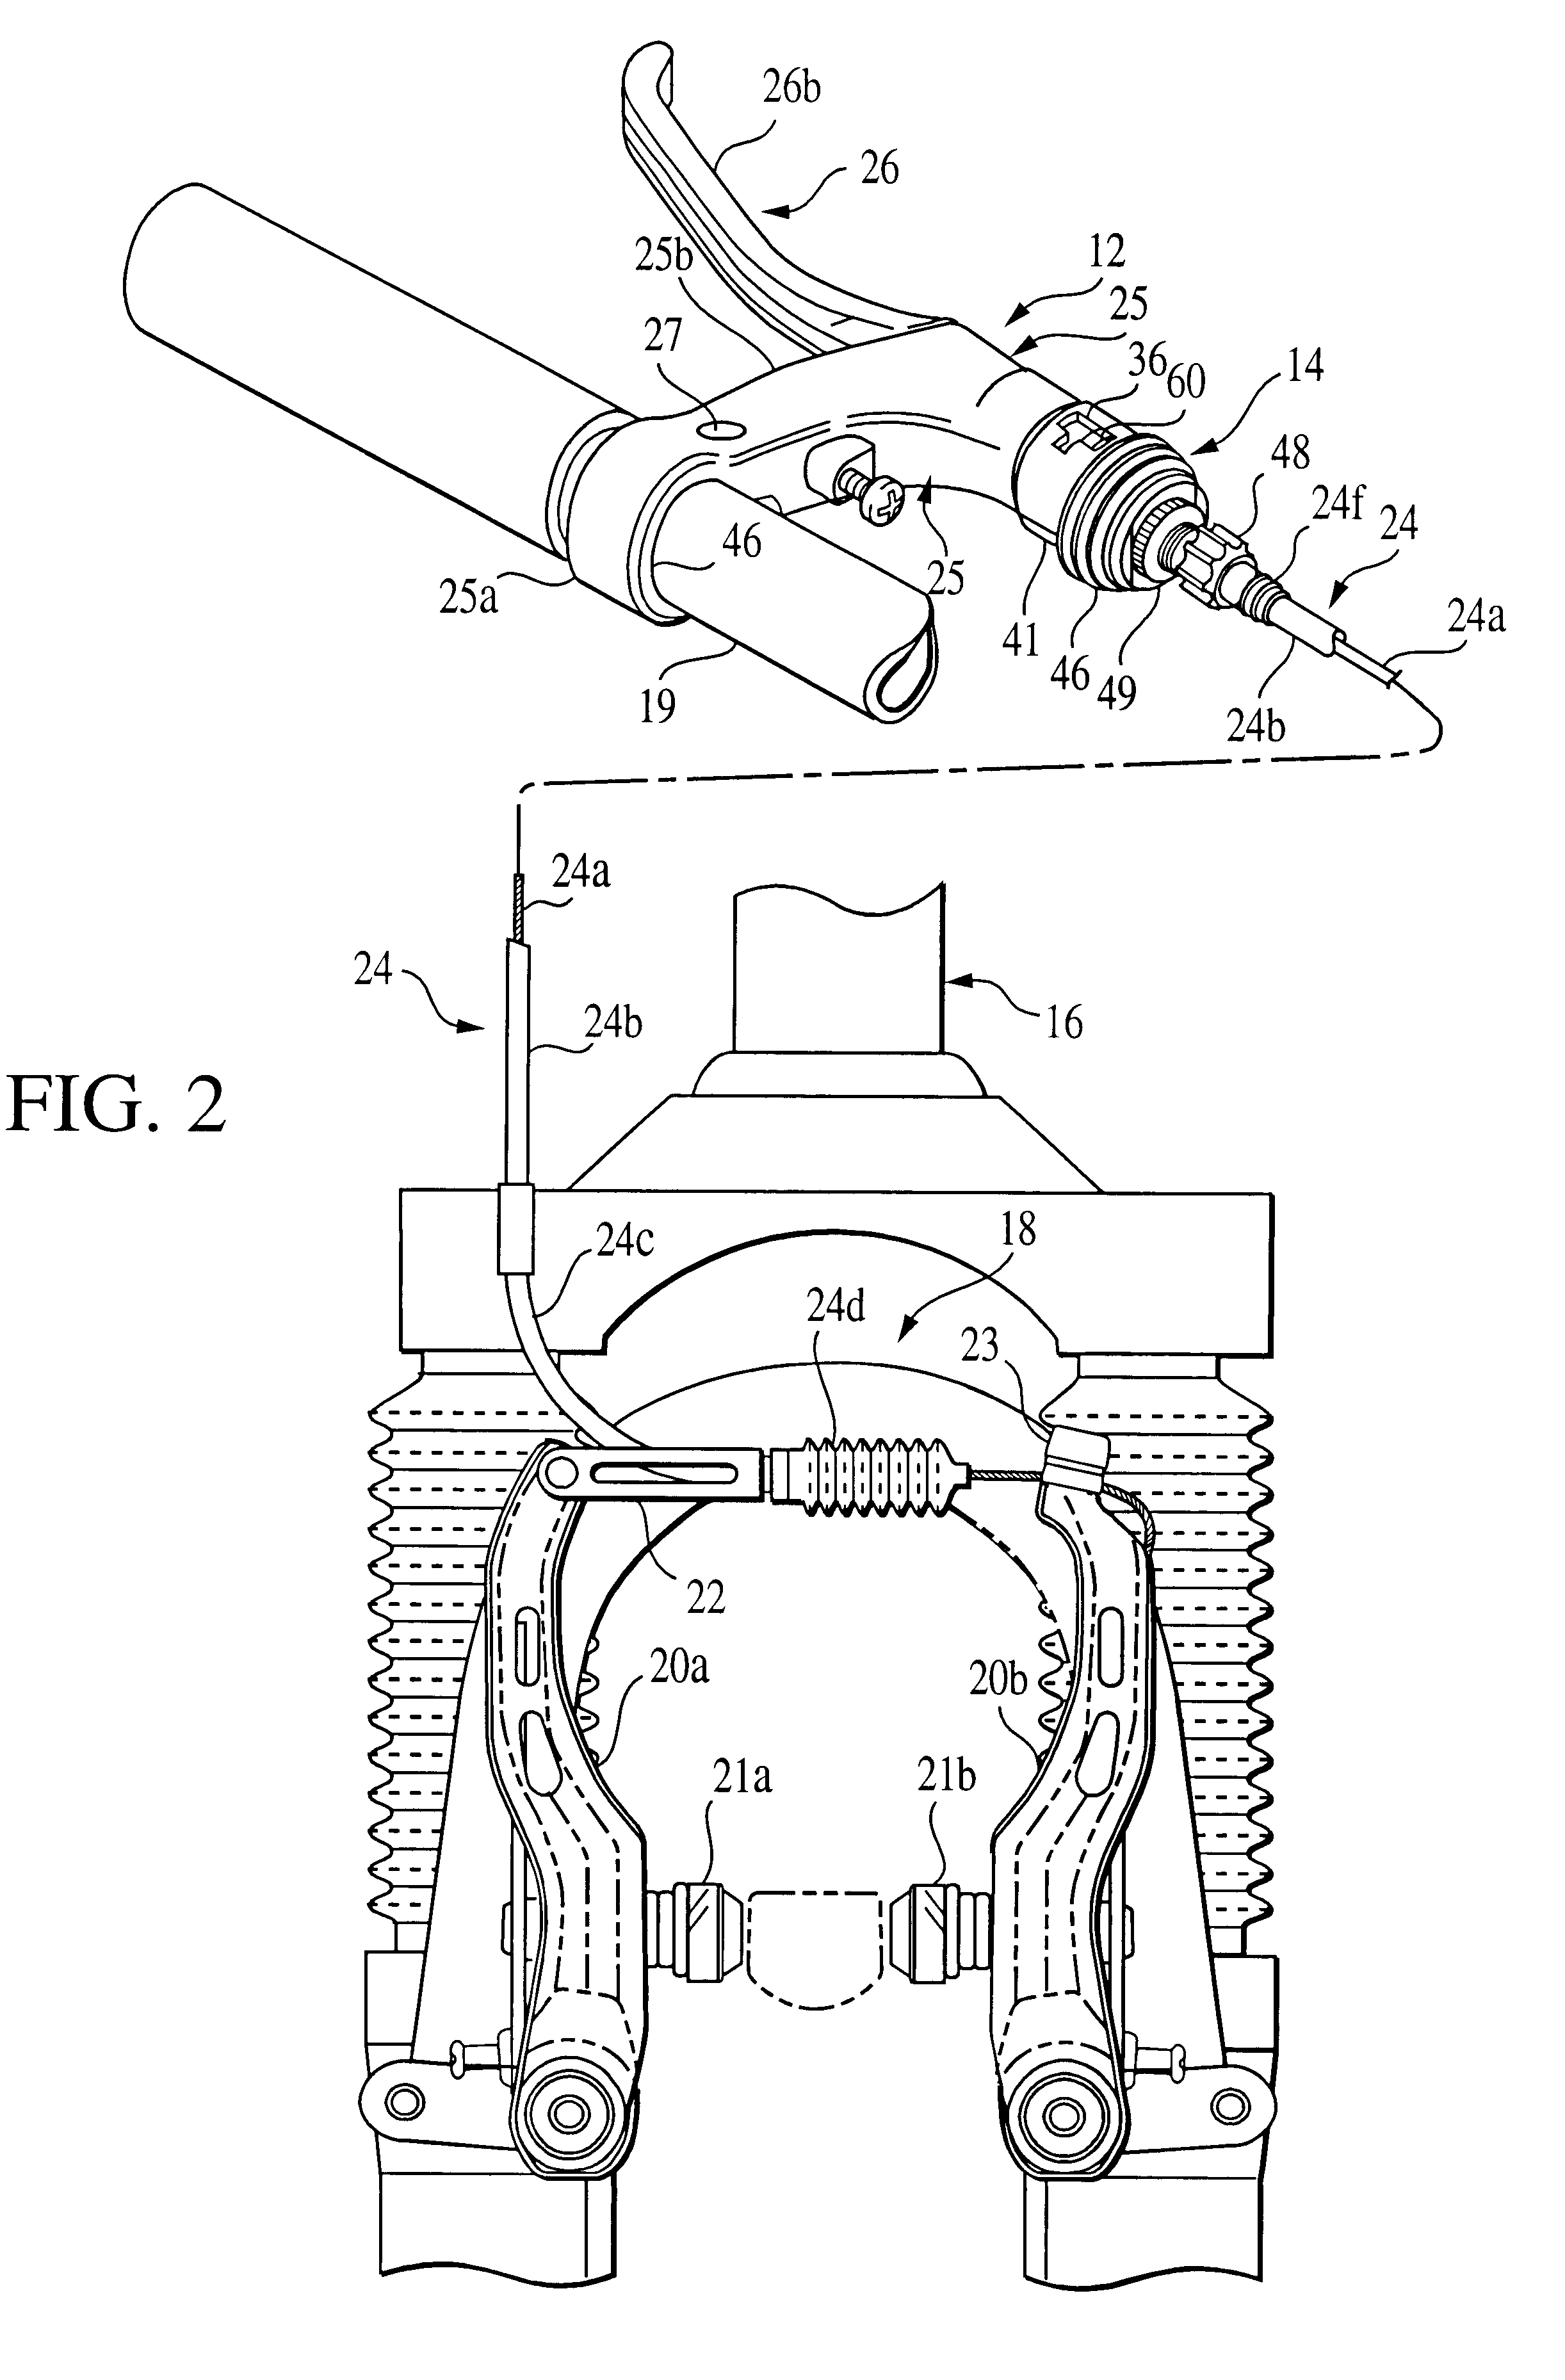 Brake operating device with modulator